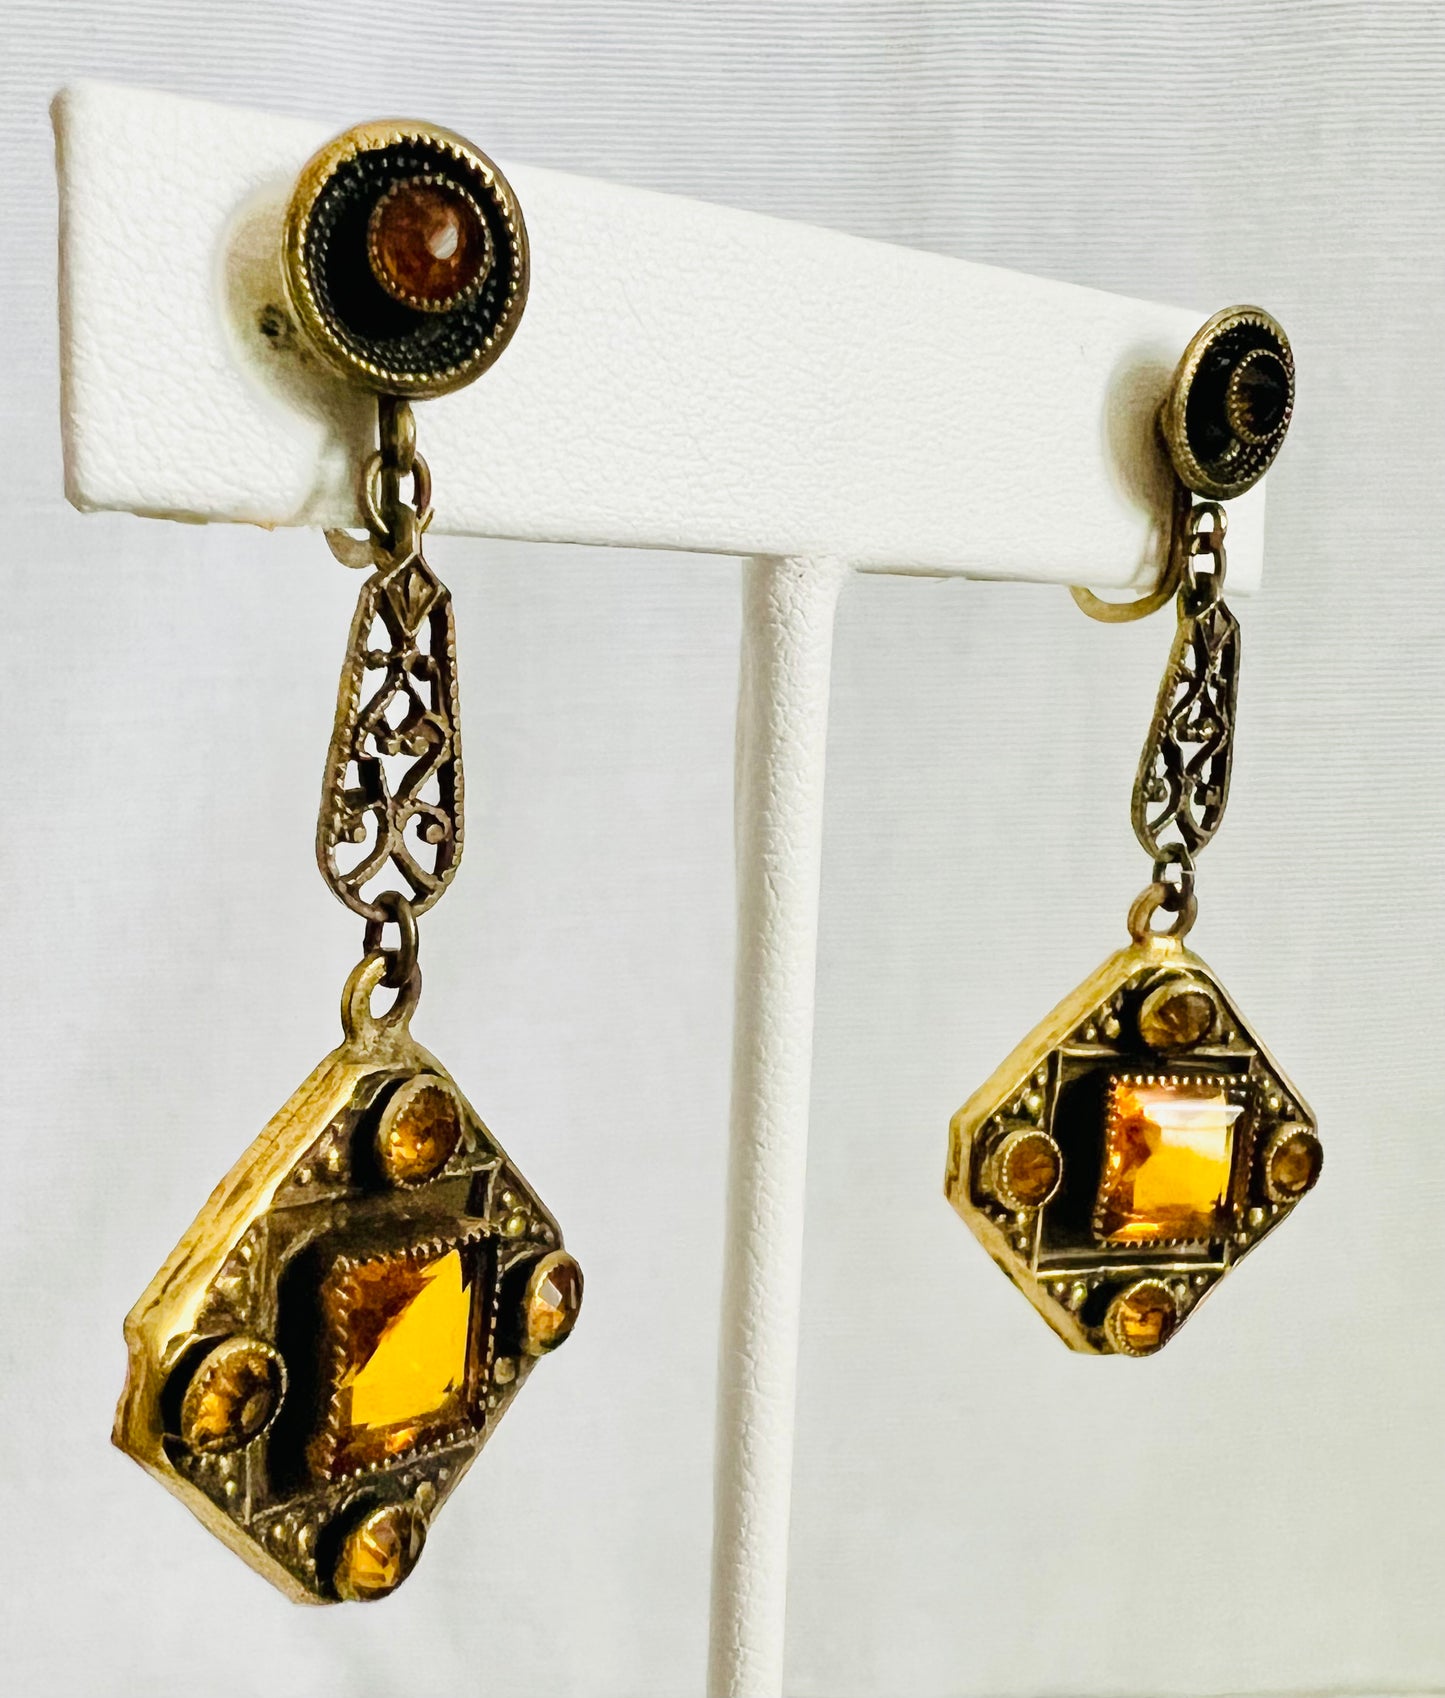 Vintage 1930s Art Deco Amber Glass Filigree Earrings